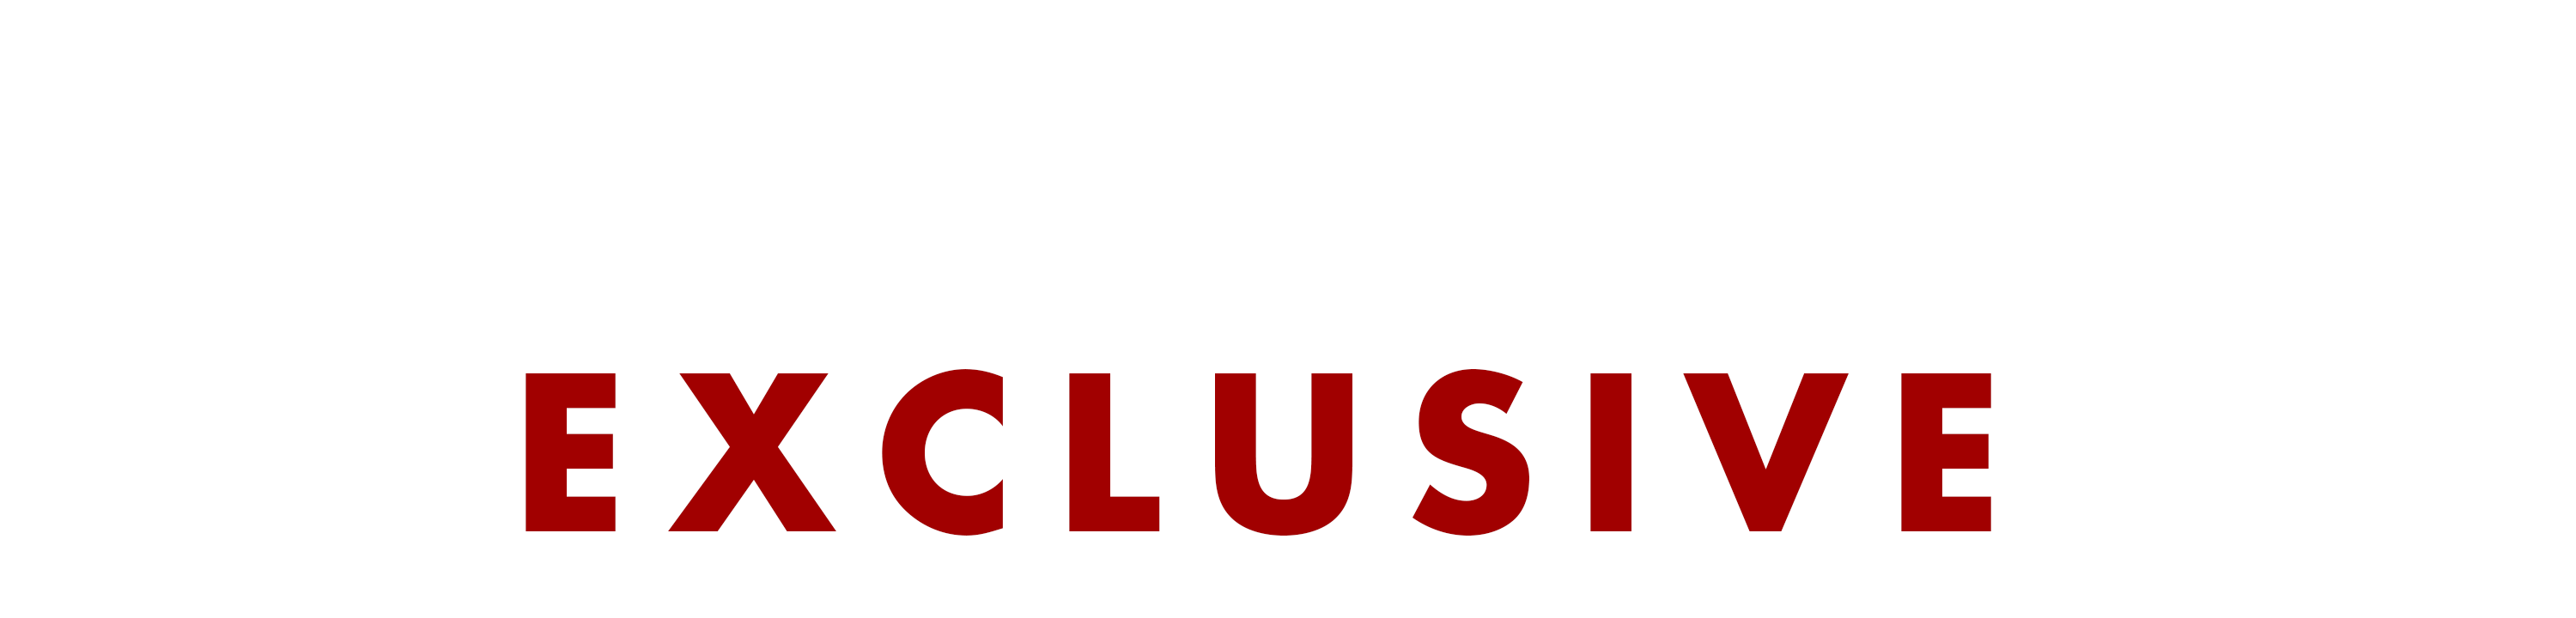 A Kyle Rittenhouse Exclusive logo